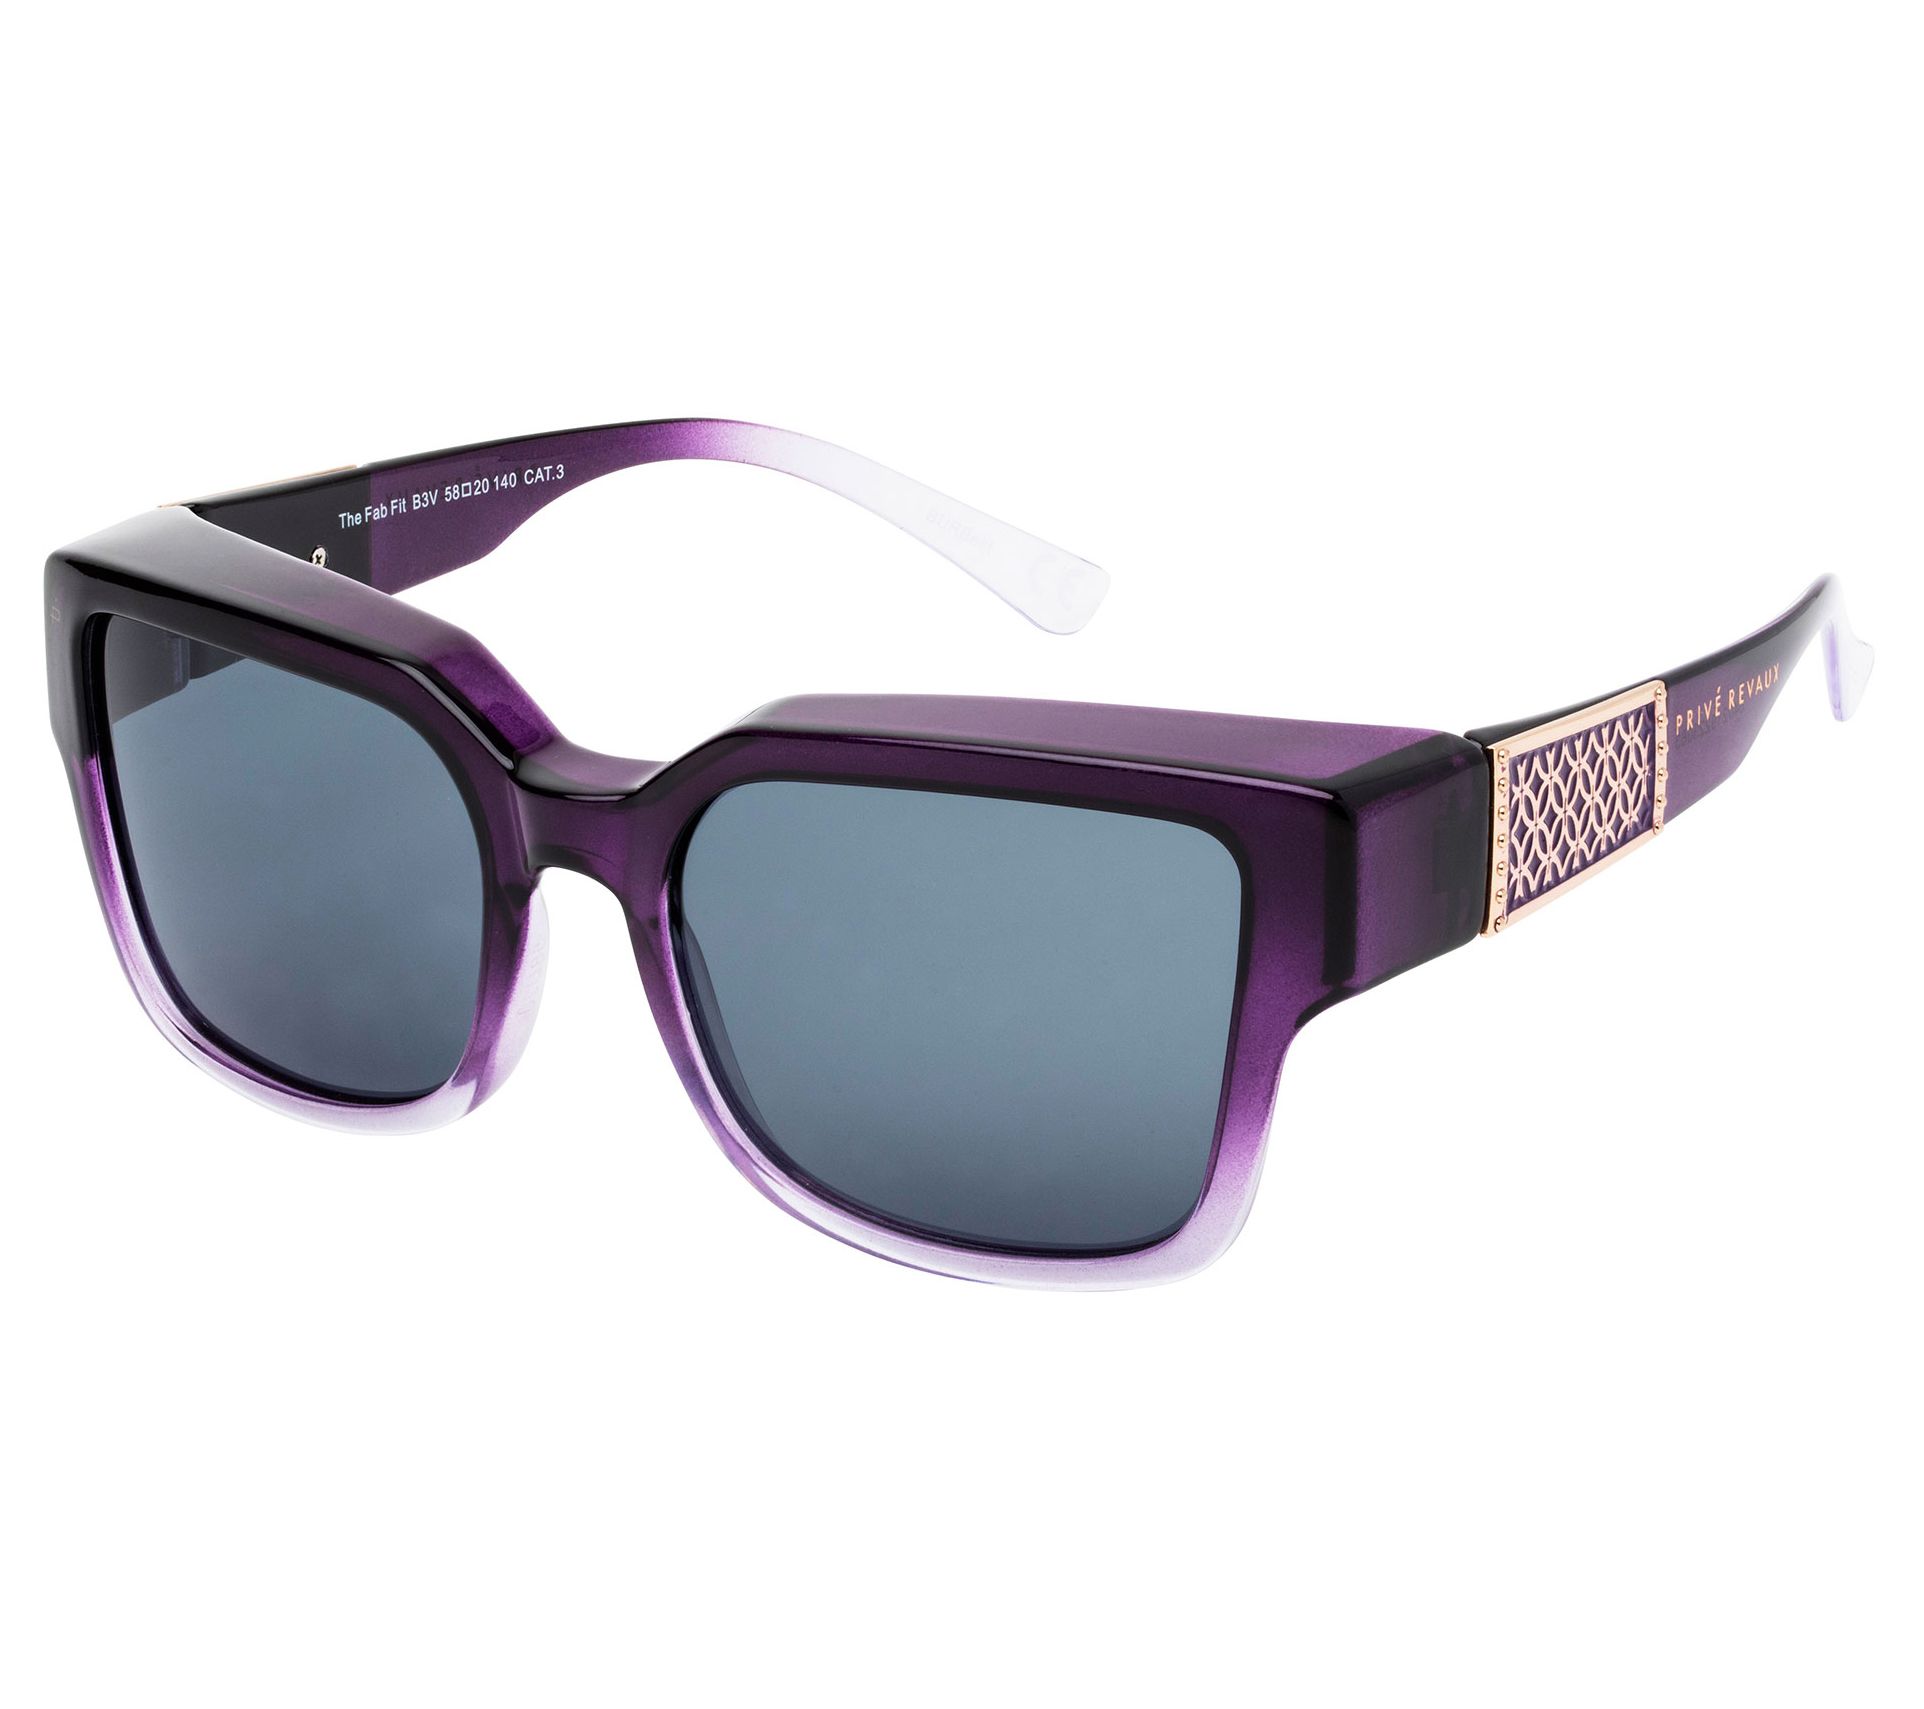 Privé Revaux | The Glide Sunglasses | Black | Medium